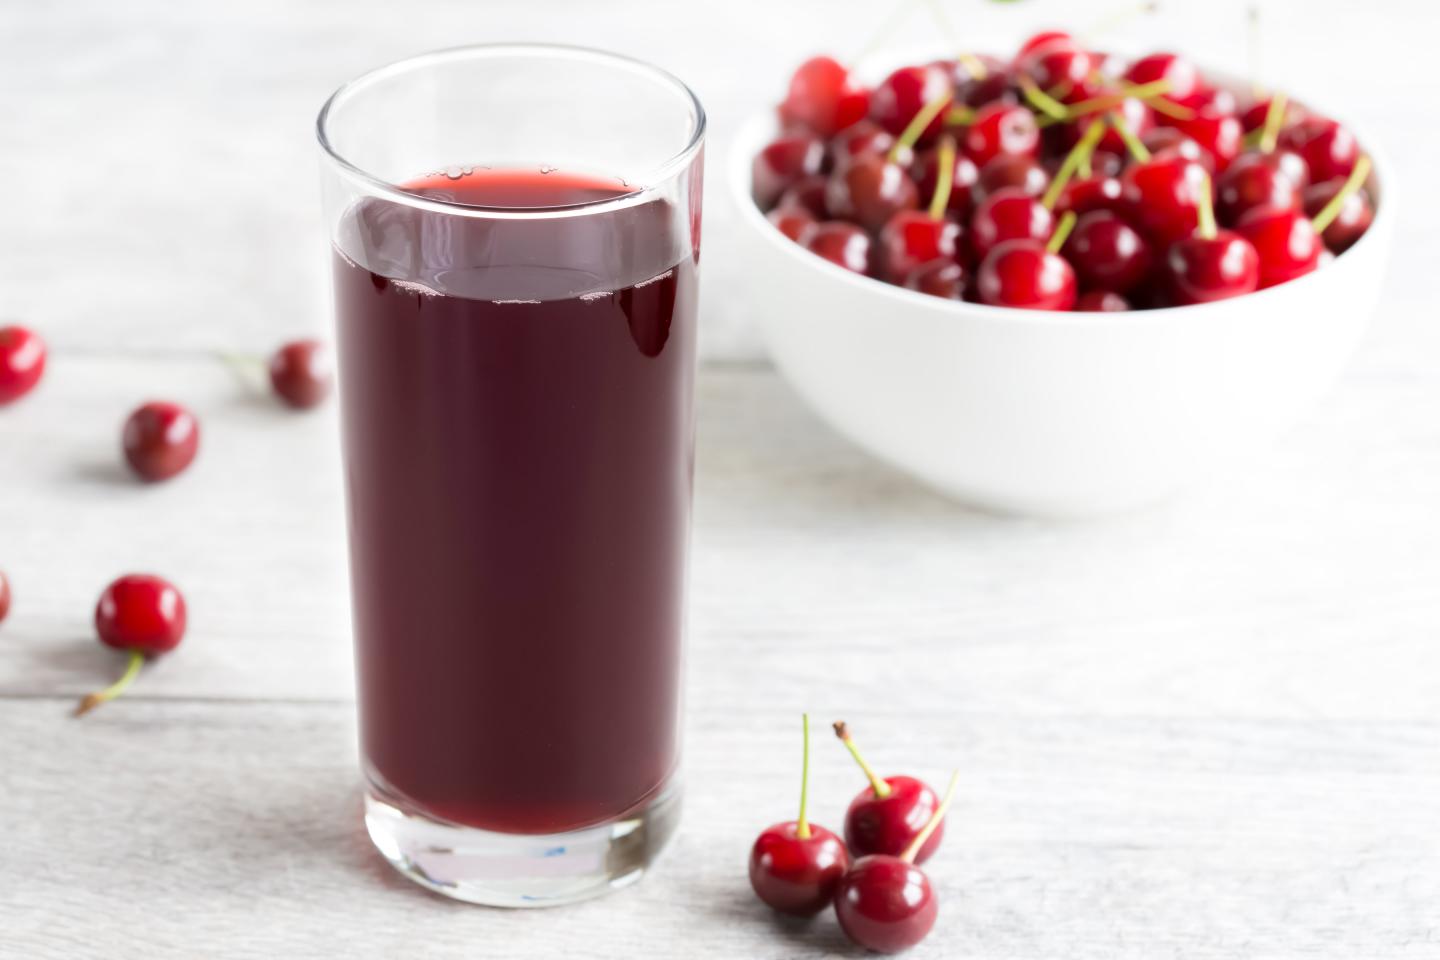 Tart cherry juice for better sleep